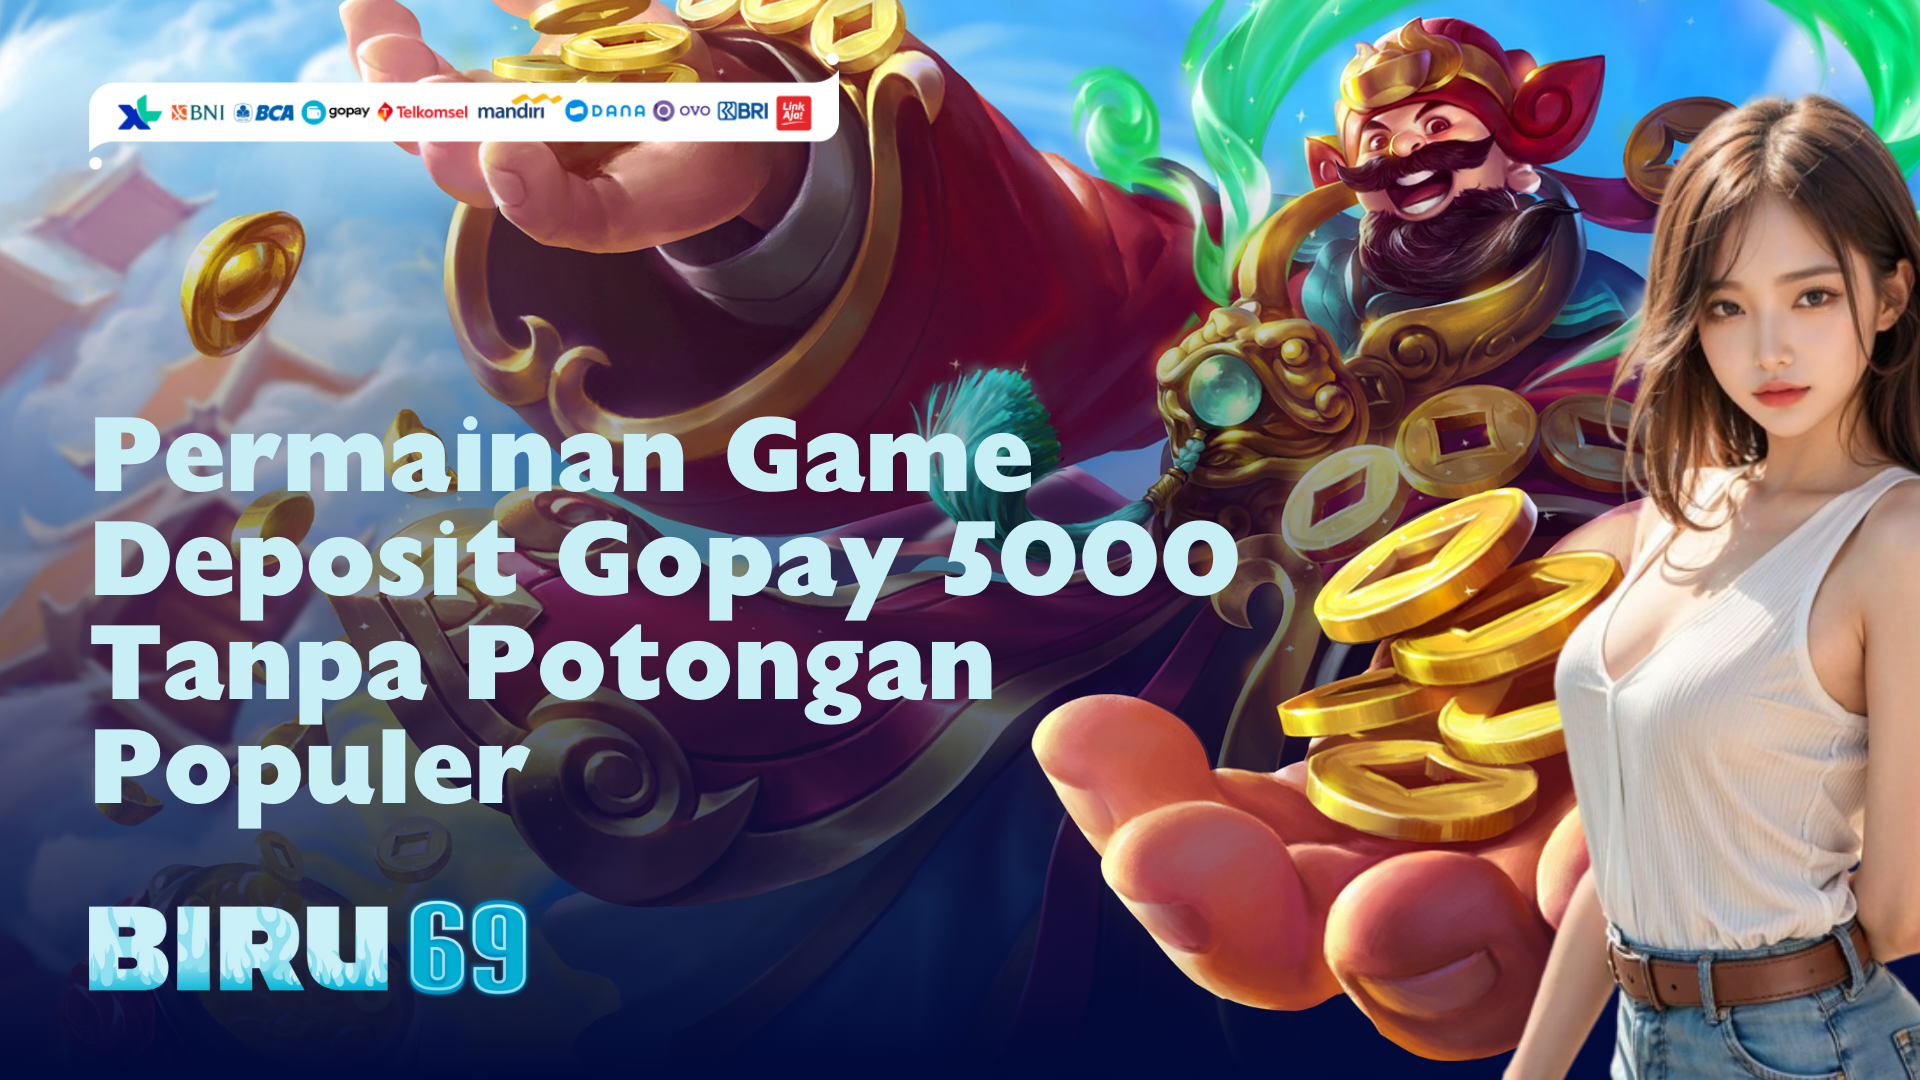 Permainan Game Deposit Gopay 5000 Tanpa Potongan Populer